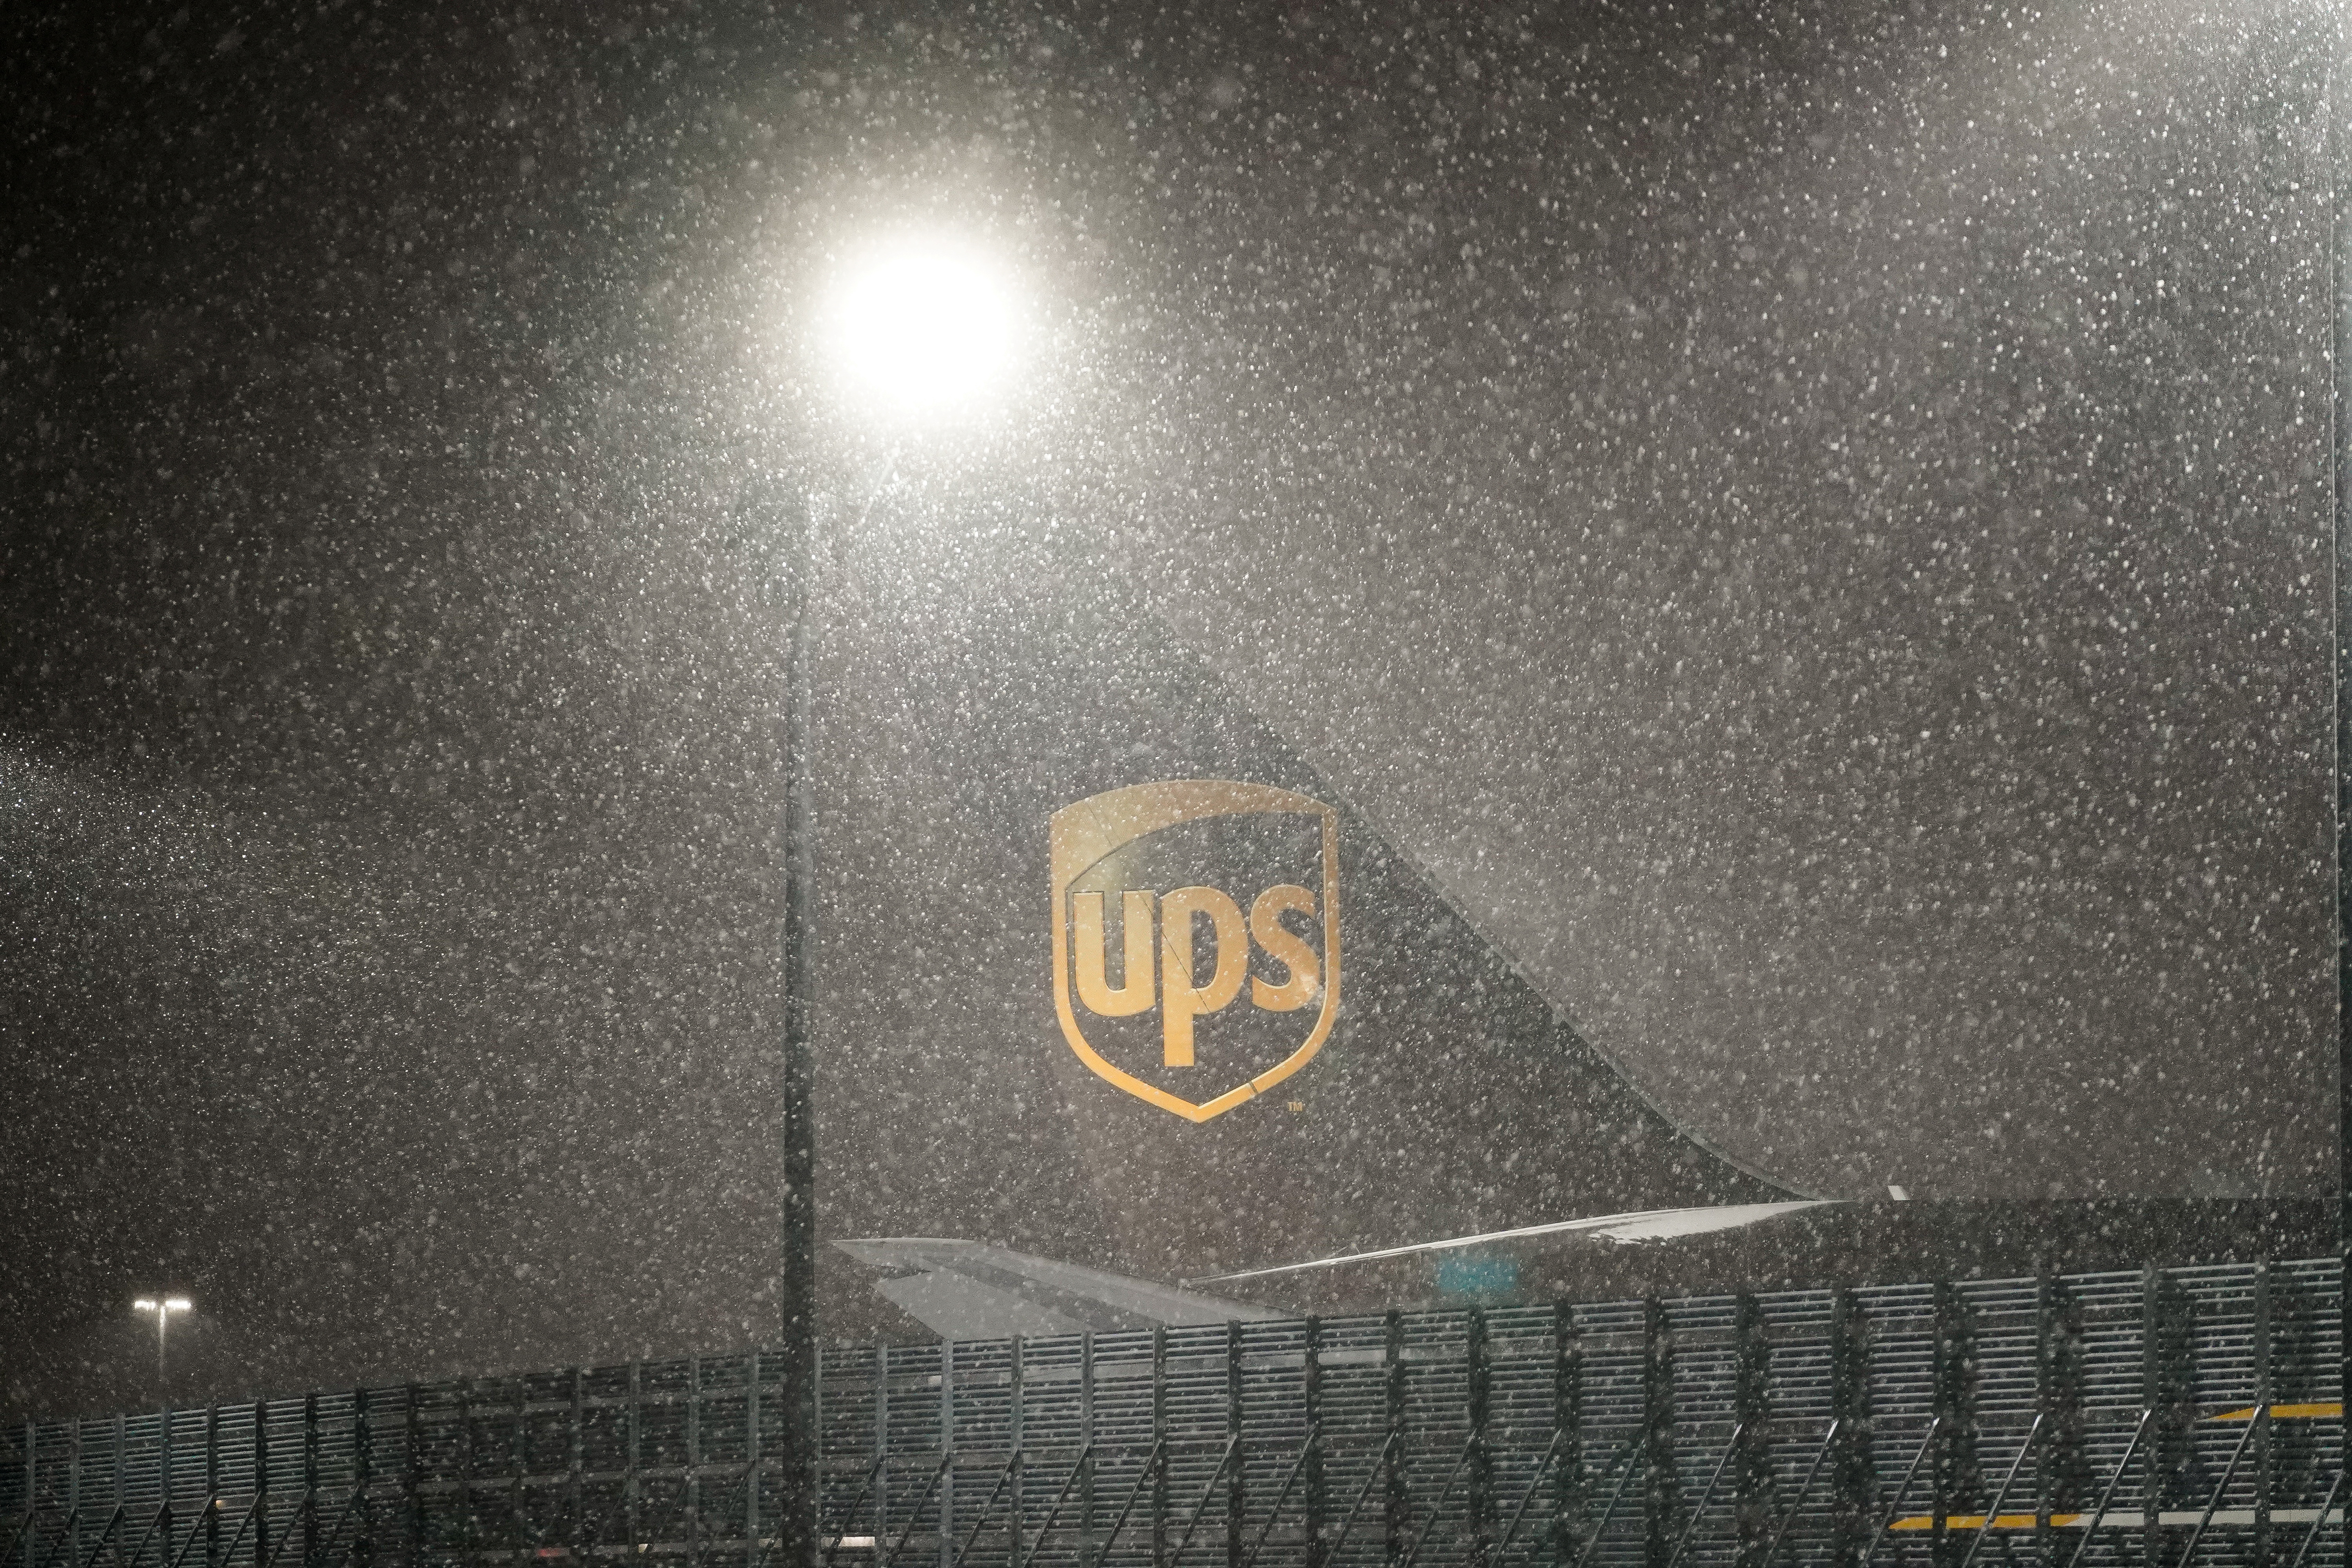 Snow falls at the United Parcel Service (UPS) WorldPort hub located at Louisville Muhammad Ali International Airport in Louisville, Kentucky, U.S., February 15, 2021. REUTERS/Bryan Woolston